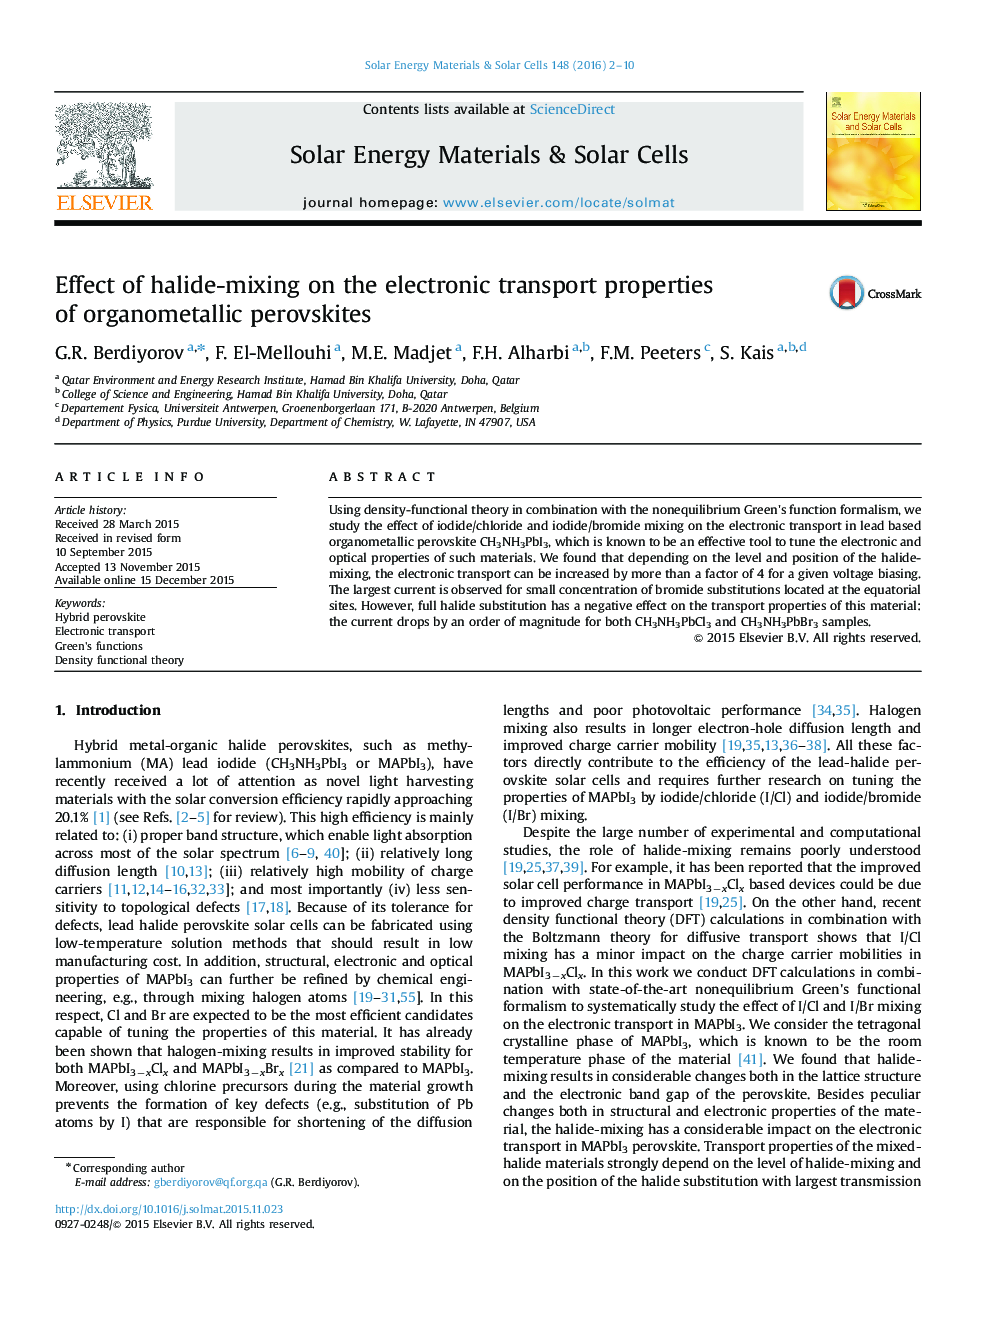 Effect of halide-mixing on the electronic transport properties of organometallic perovskites